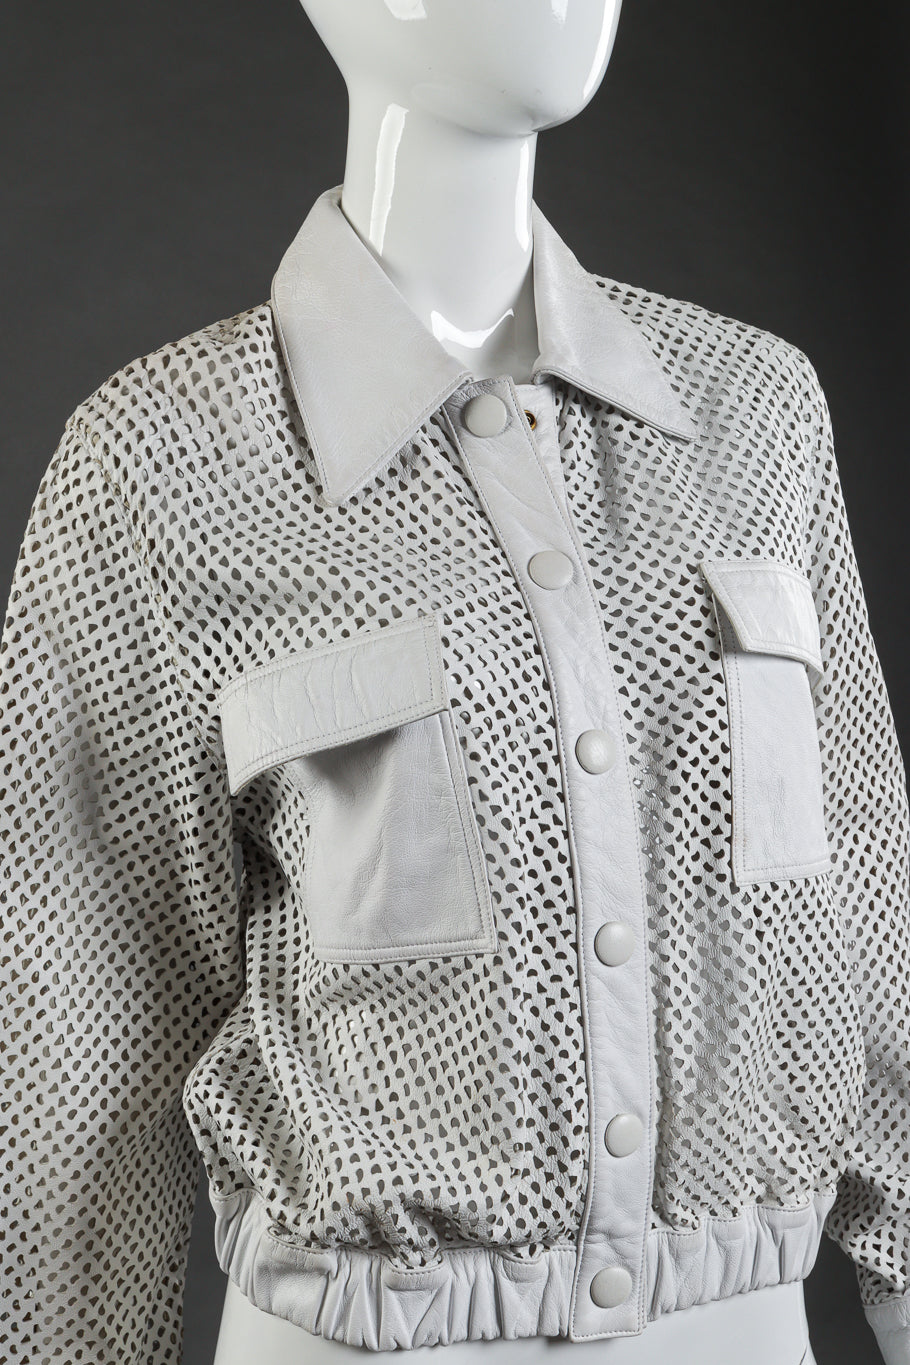 Vintage Julian K Perforated Leather Jacket front on mannequin closeup @recess la